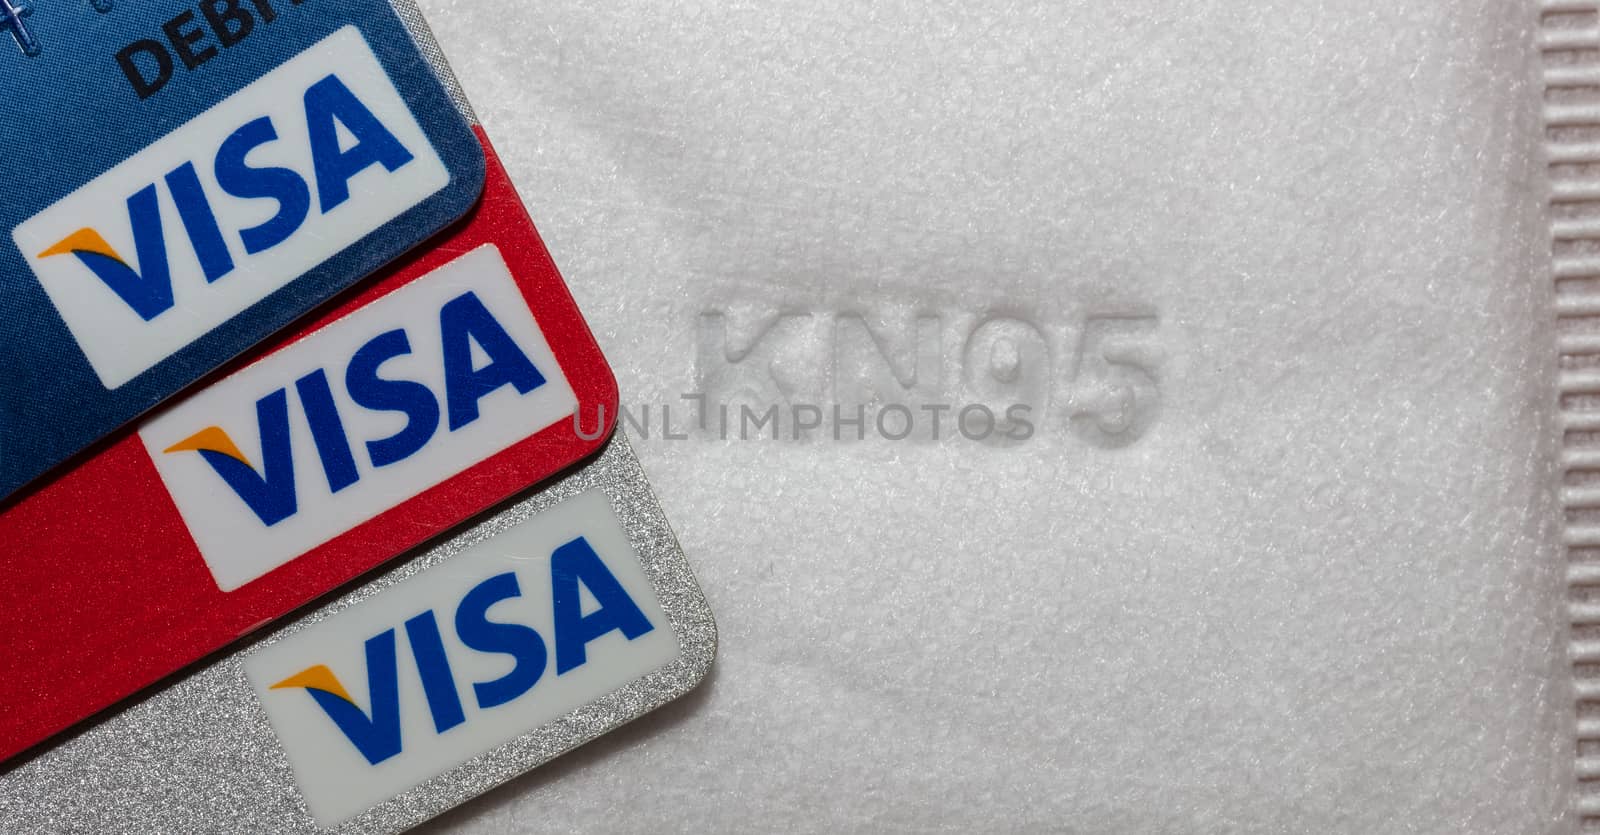 Part of KN95 facial mask and visa debit cards by DamantisZ